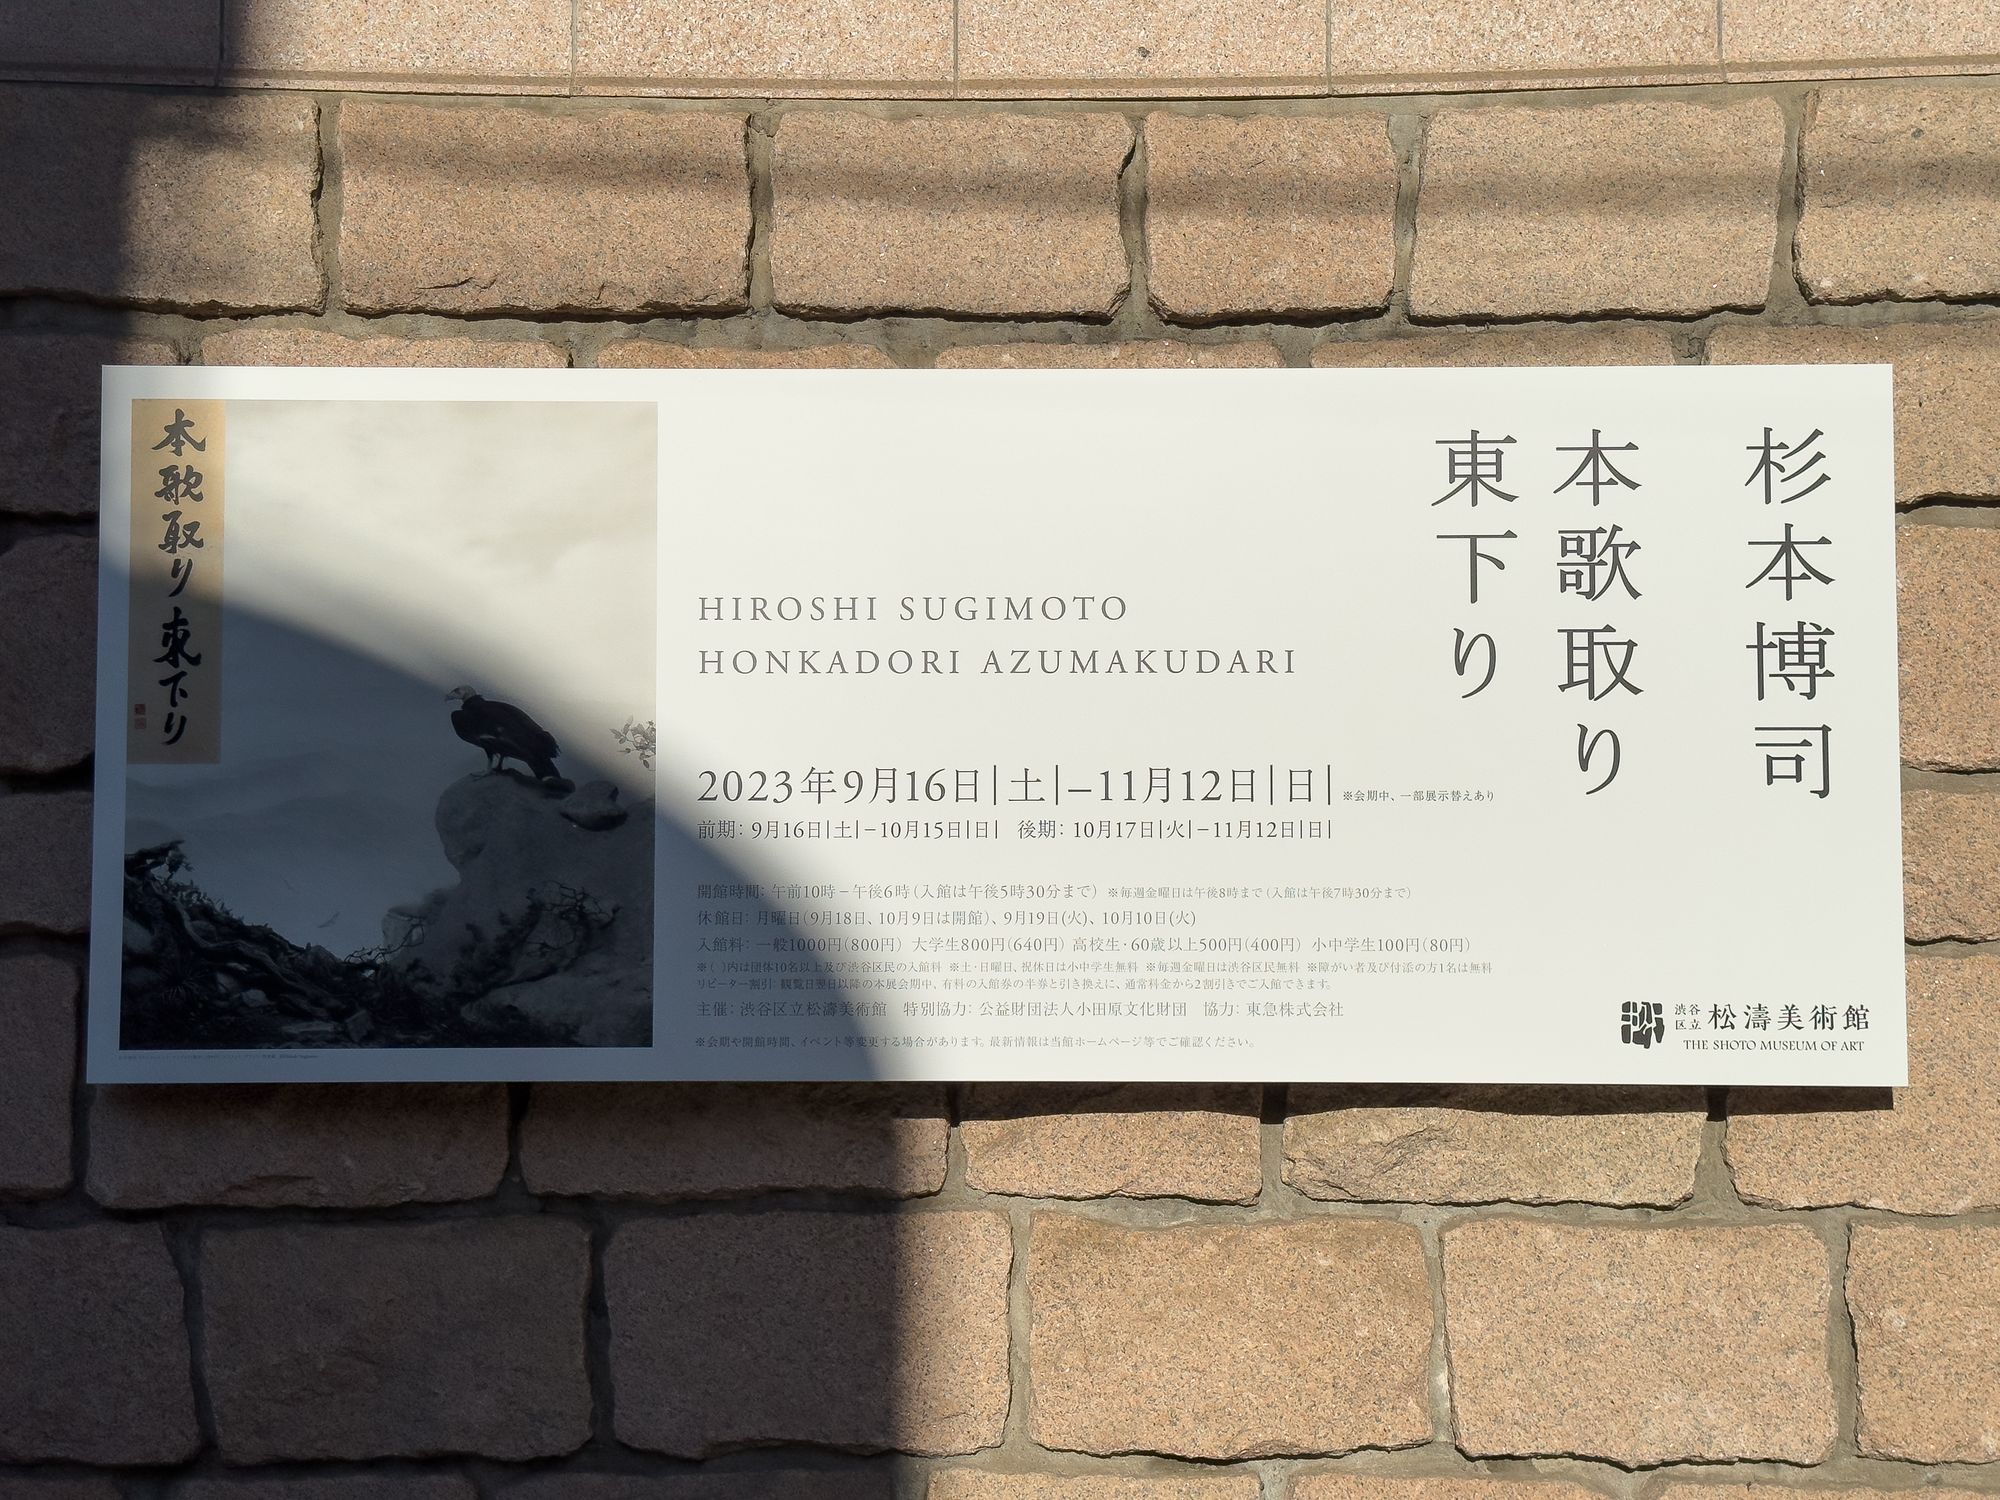 Okita-side #031: 杉本博司「本歌取り 東下り」展を解説します